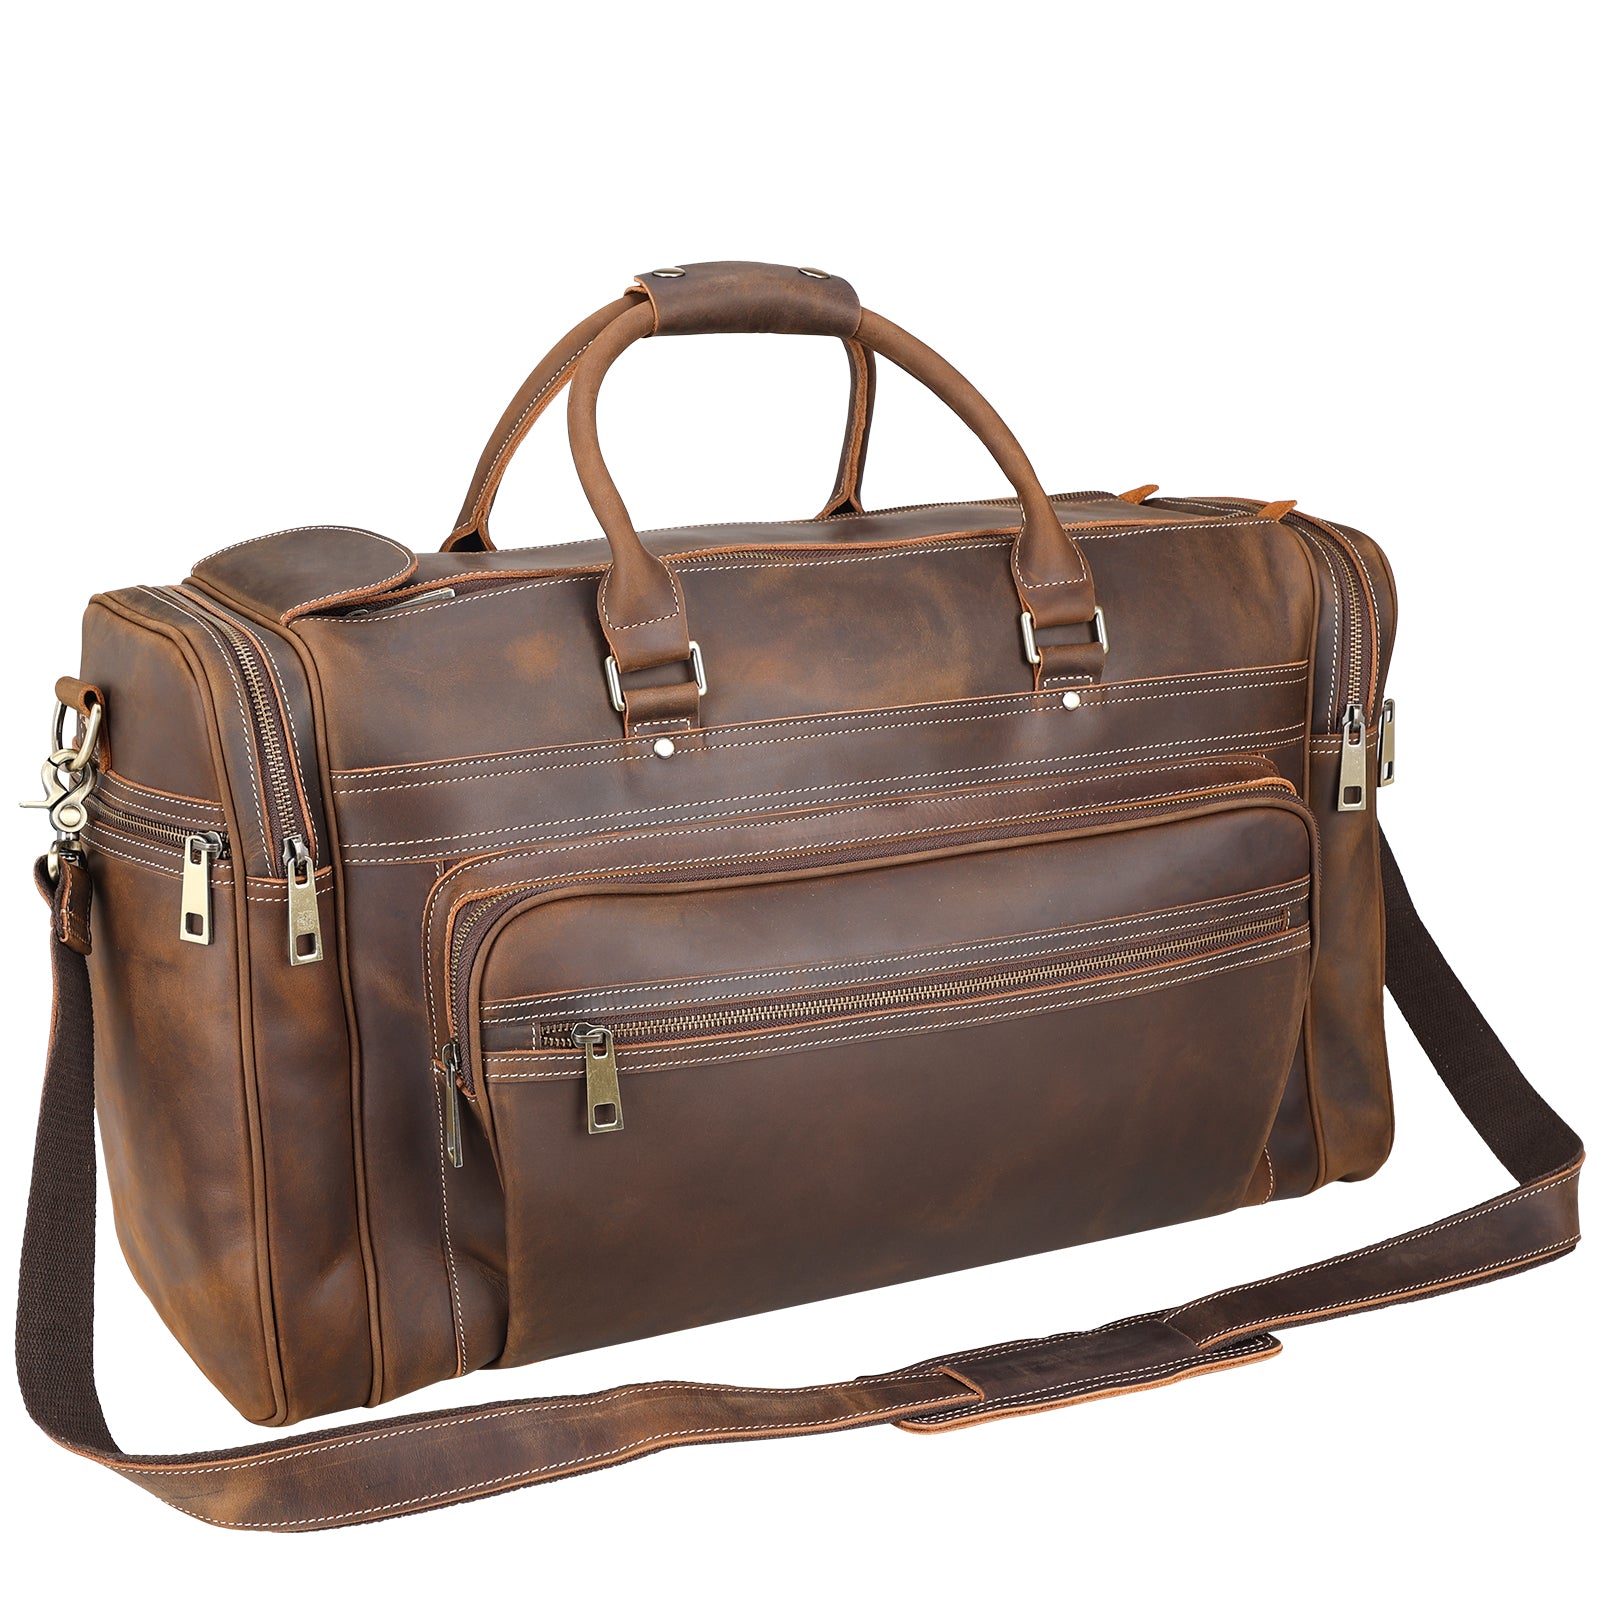 Polare 23.6" Retro Full Grain Leather Duffel Weekender Travel Bag (Brown)